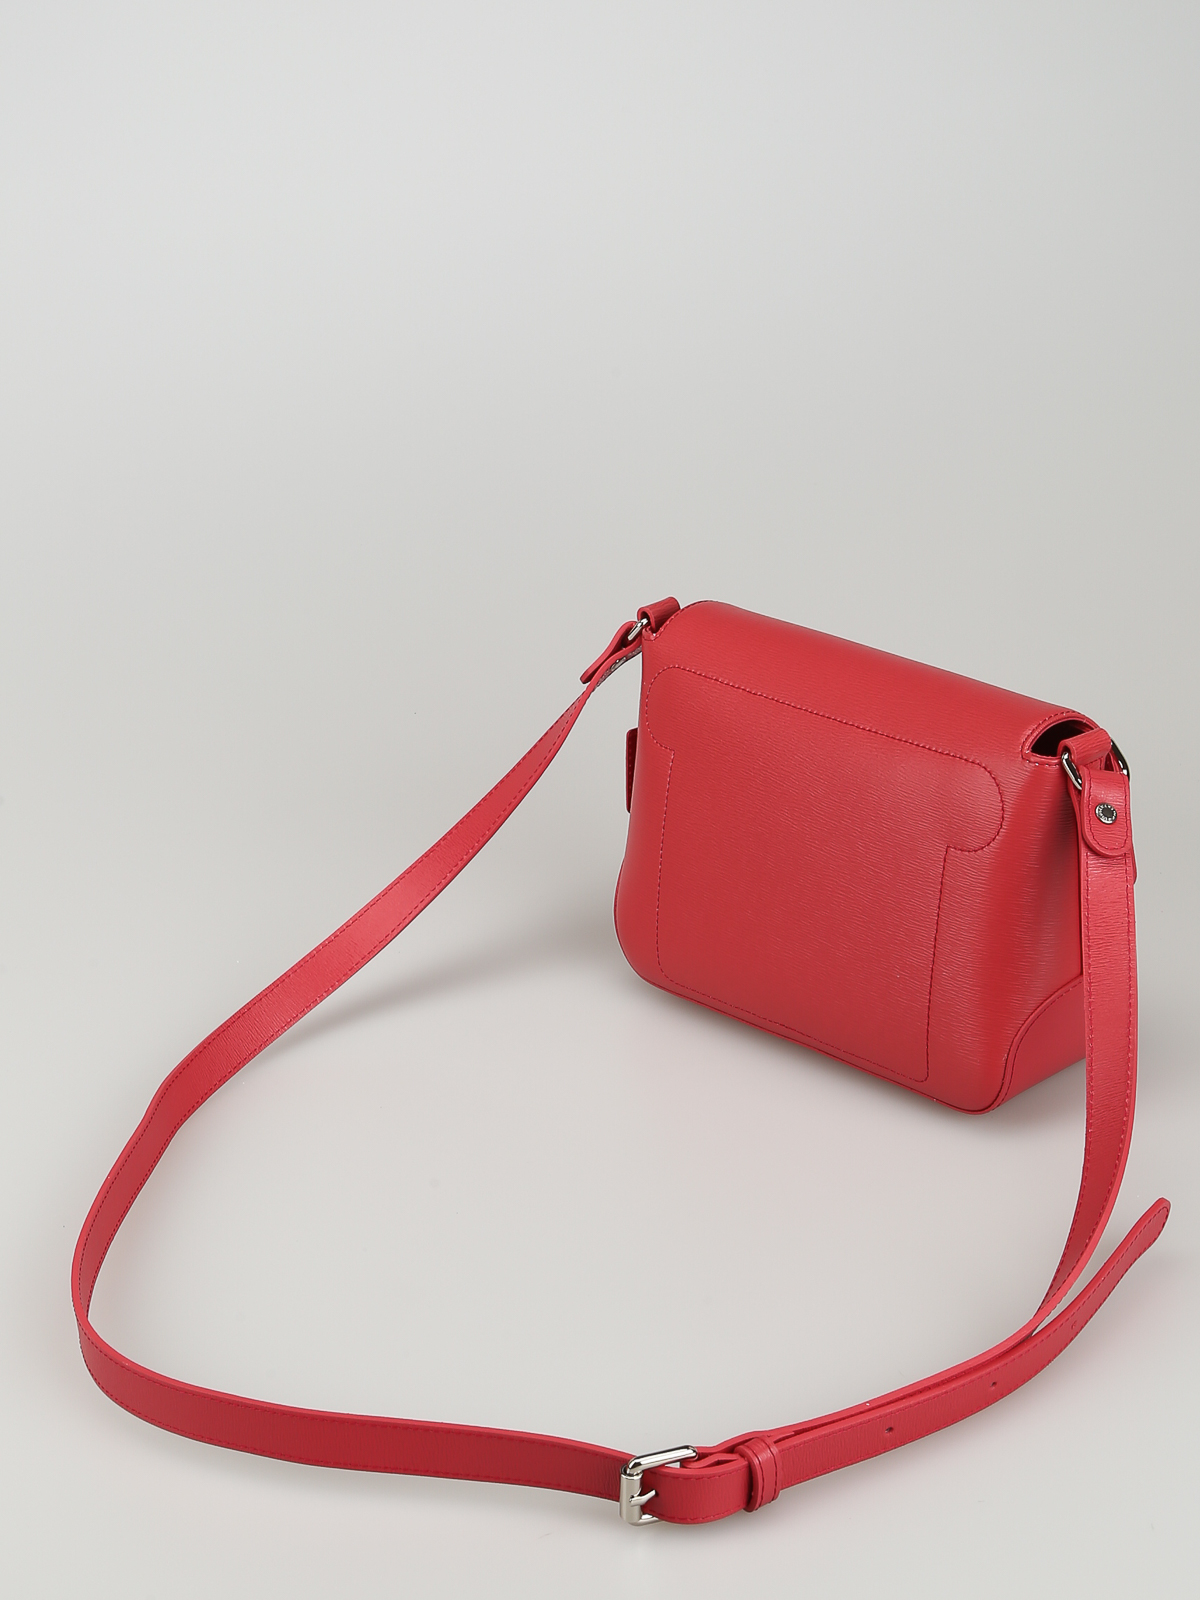 LongChamp Women's Red Leather Roseau Medium Leather Tote Crossbody Bag 